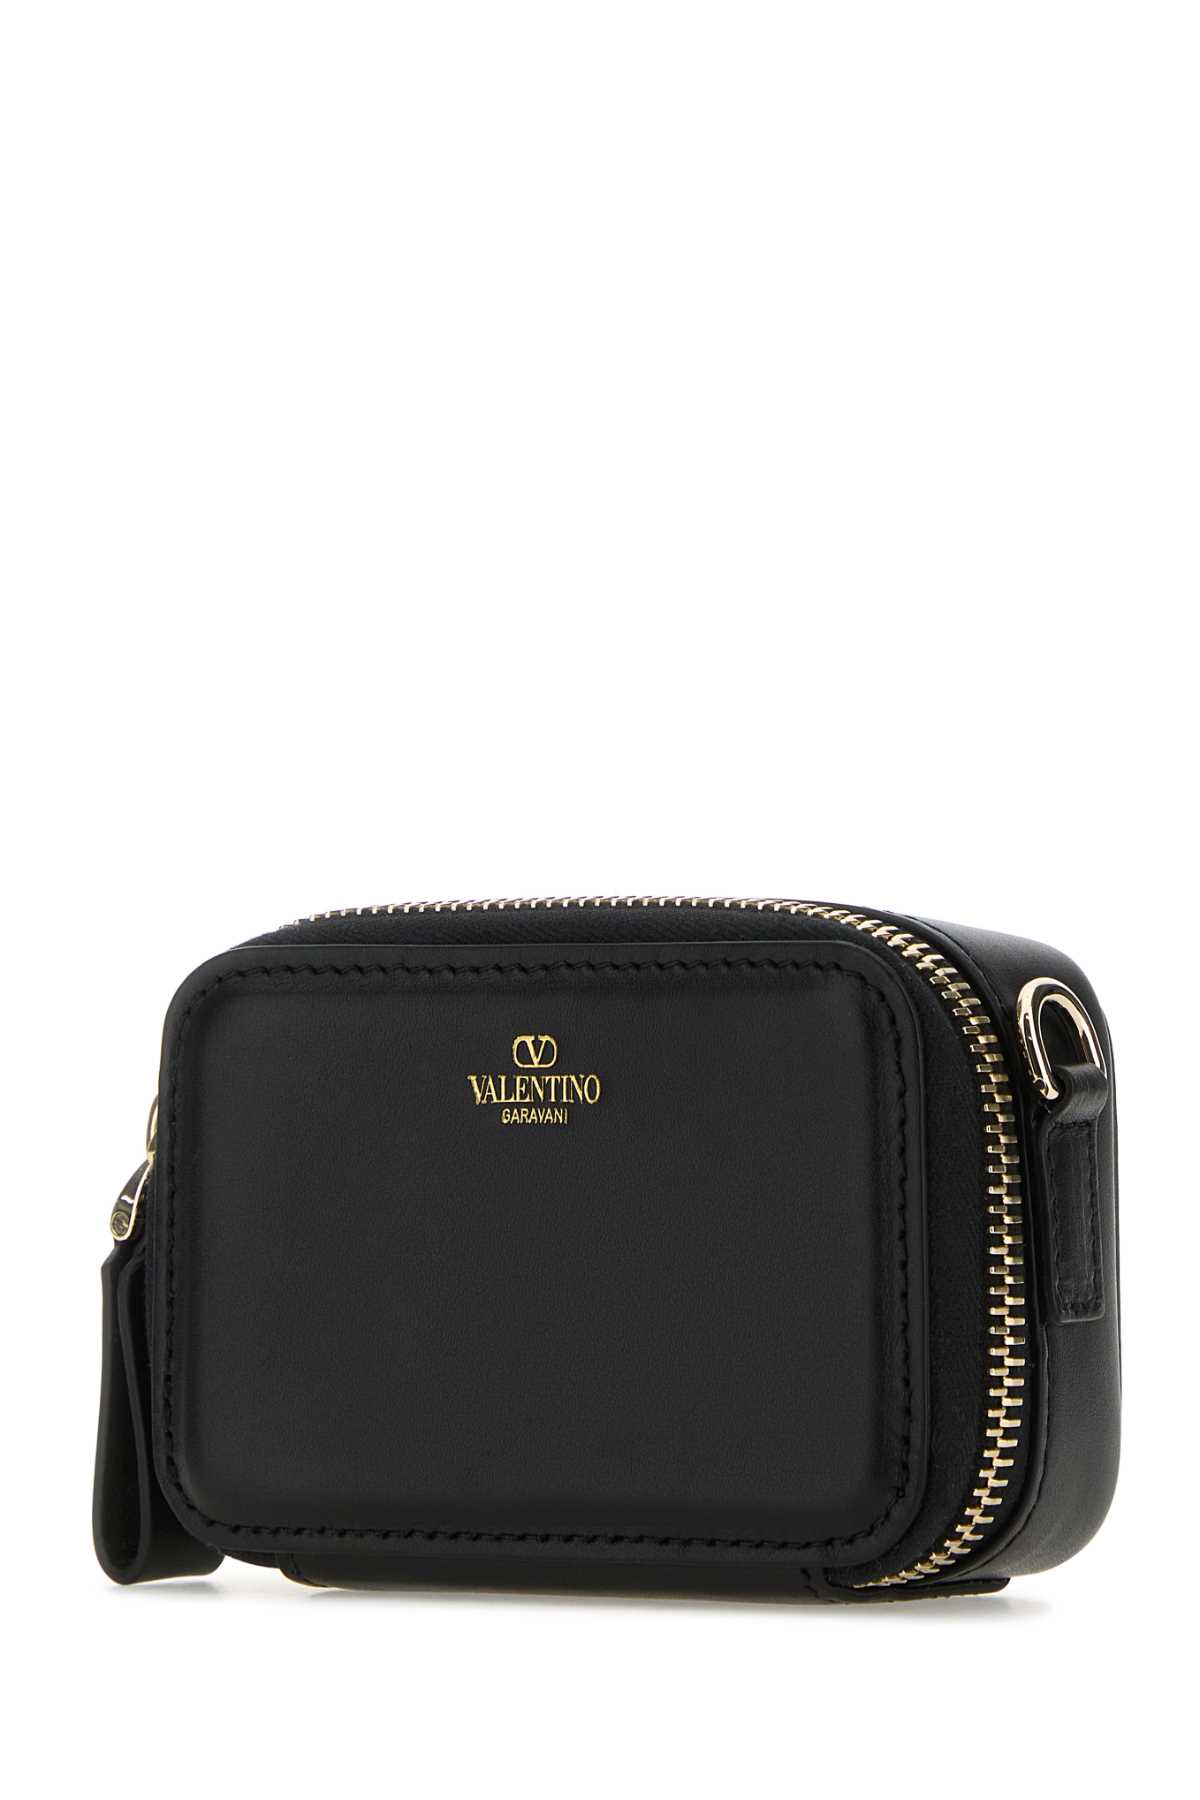 Valentino Garavani Black Leather Wallet In Nero